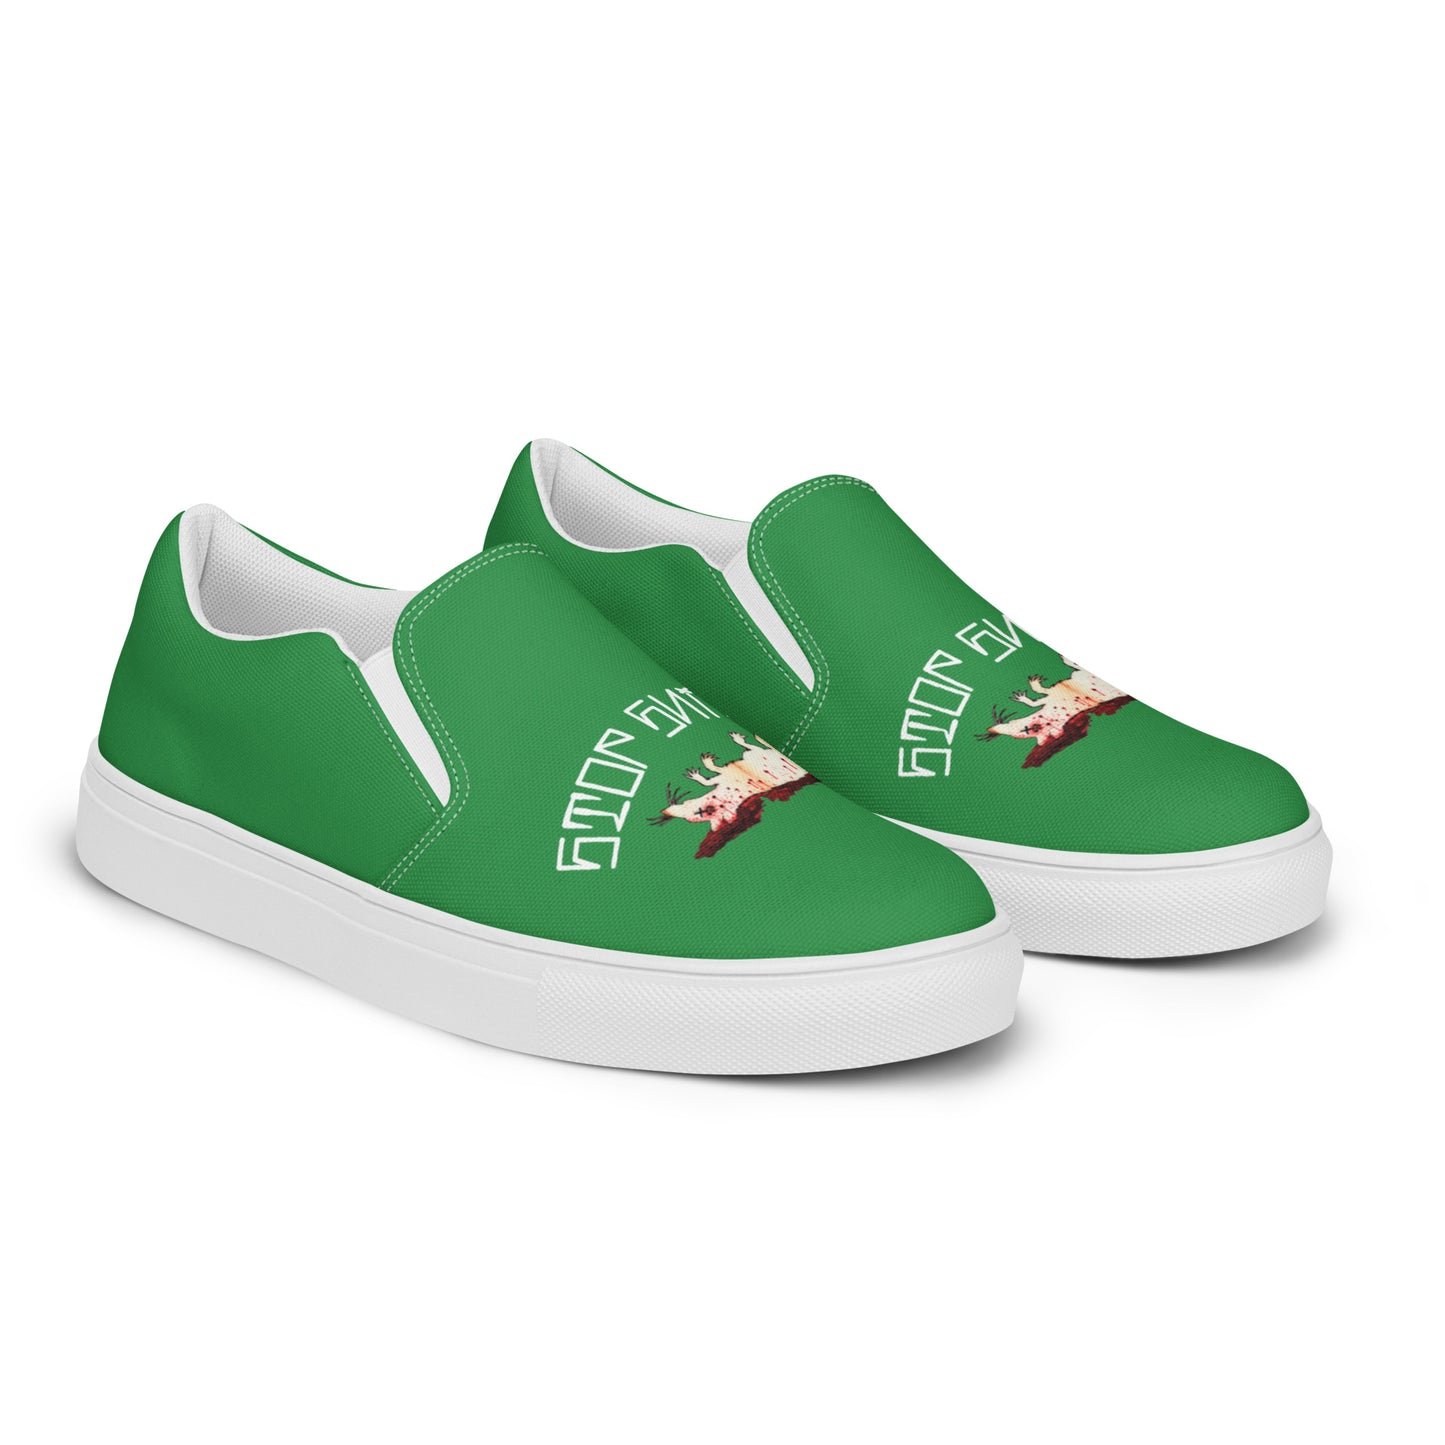 Women’s Fink Green slip-on canvas shoes